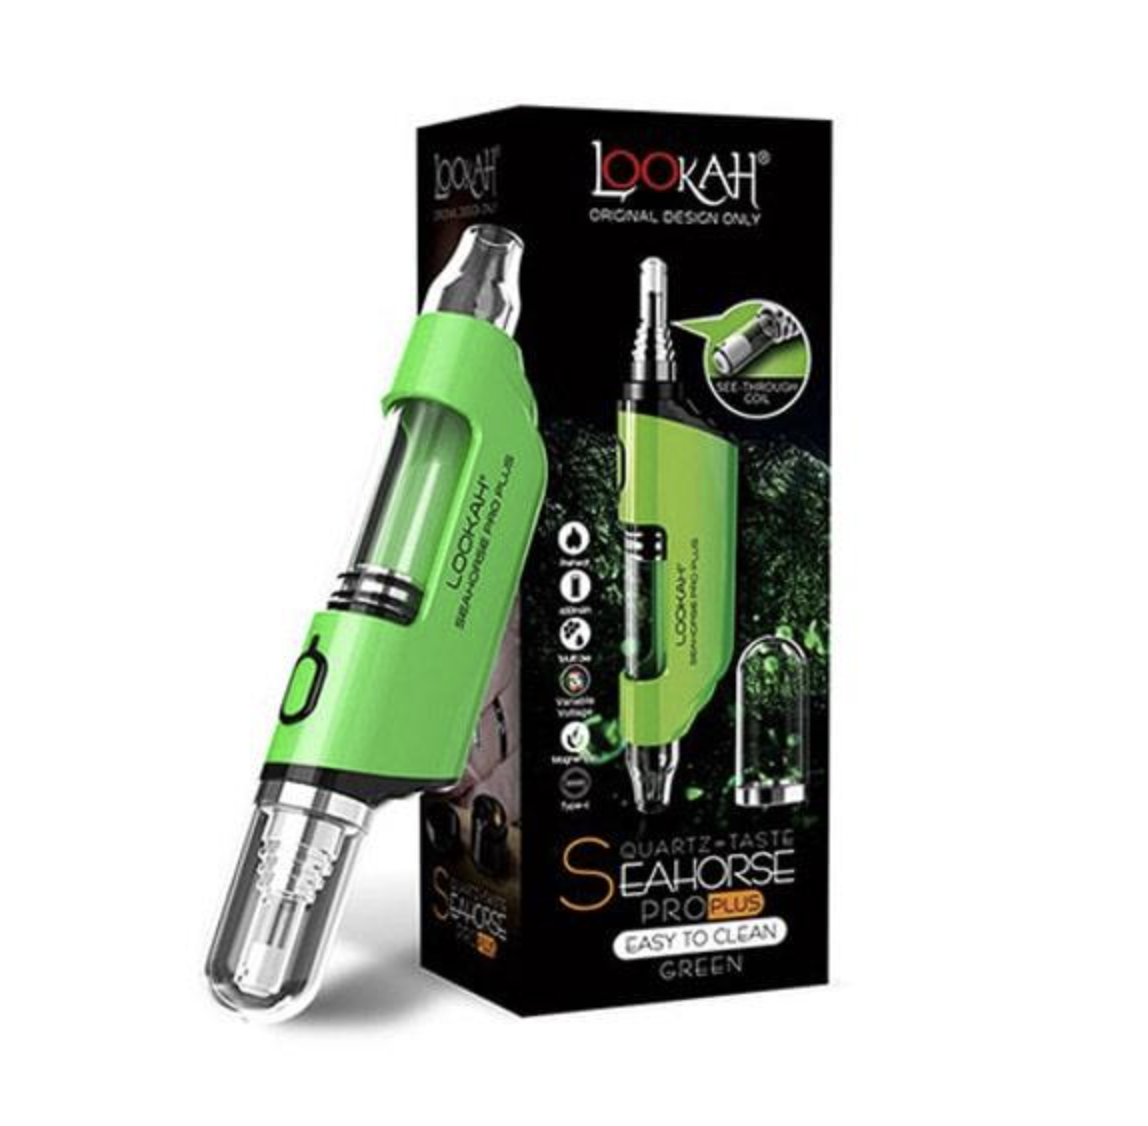 Lookah Seahorse Pro Plus Wax Pen & Dab Pen